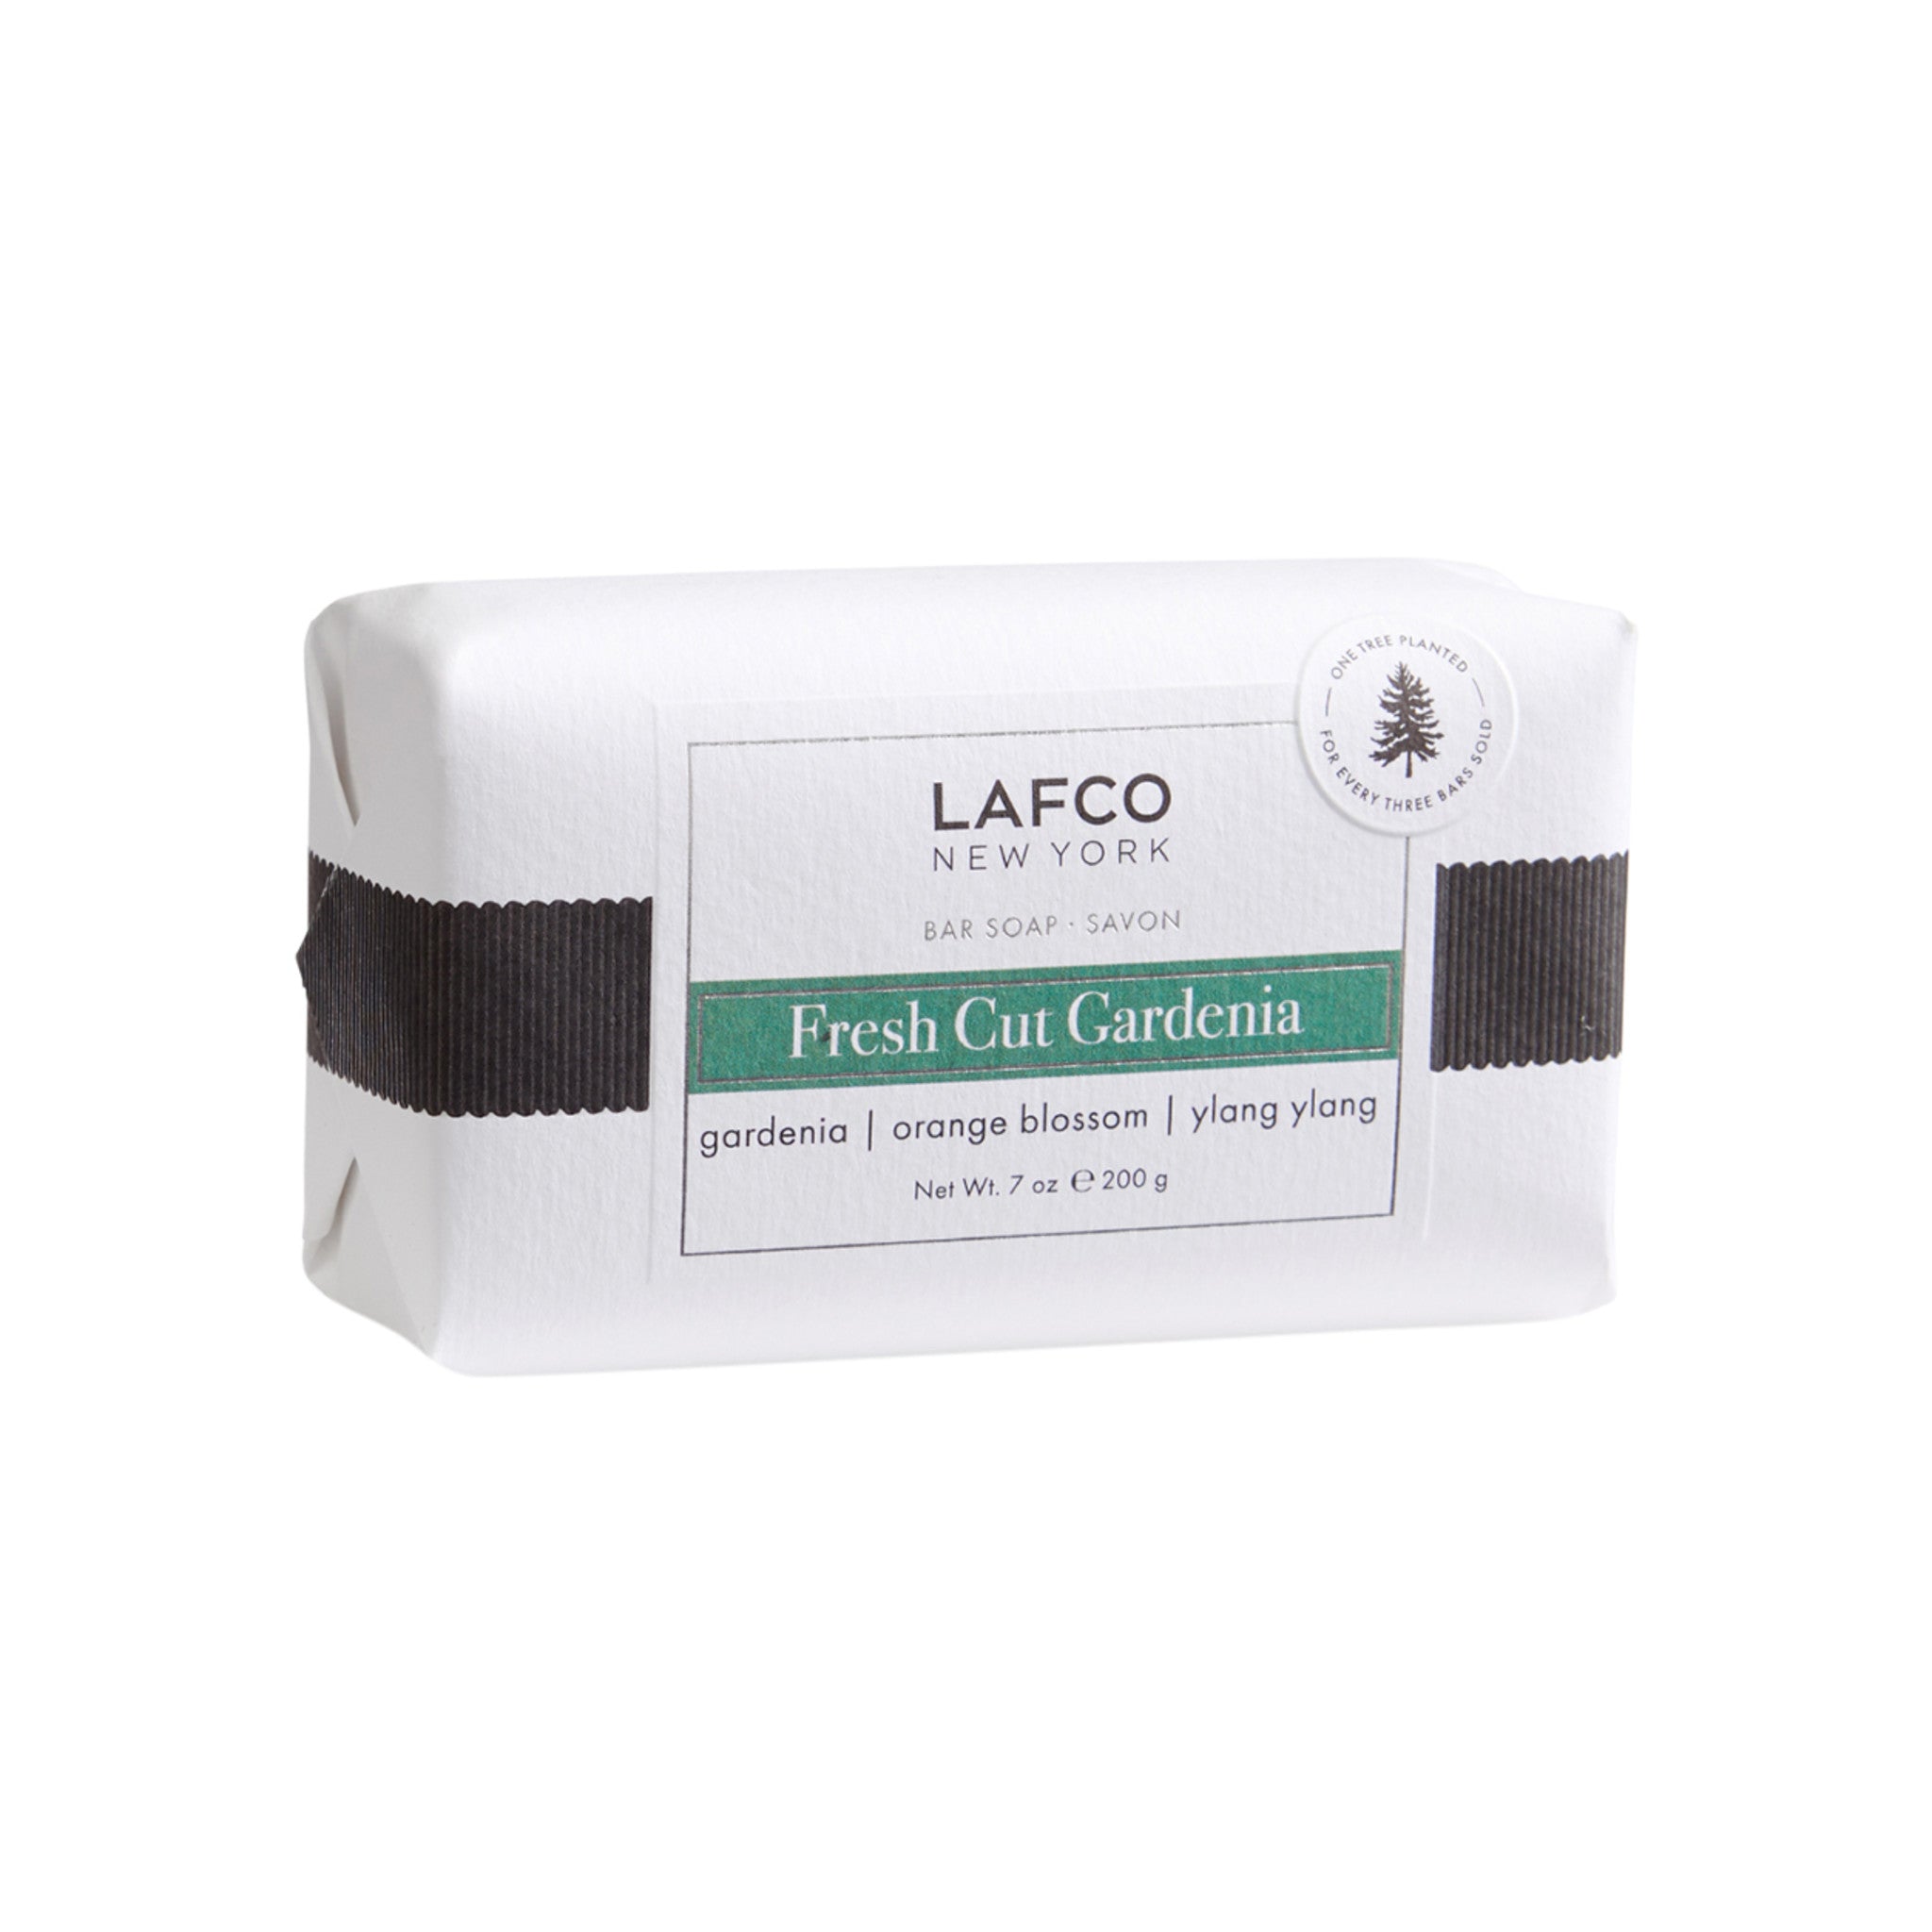 Lafco Fresh Cut Gardenia Bar Soap main image.